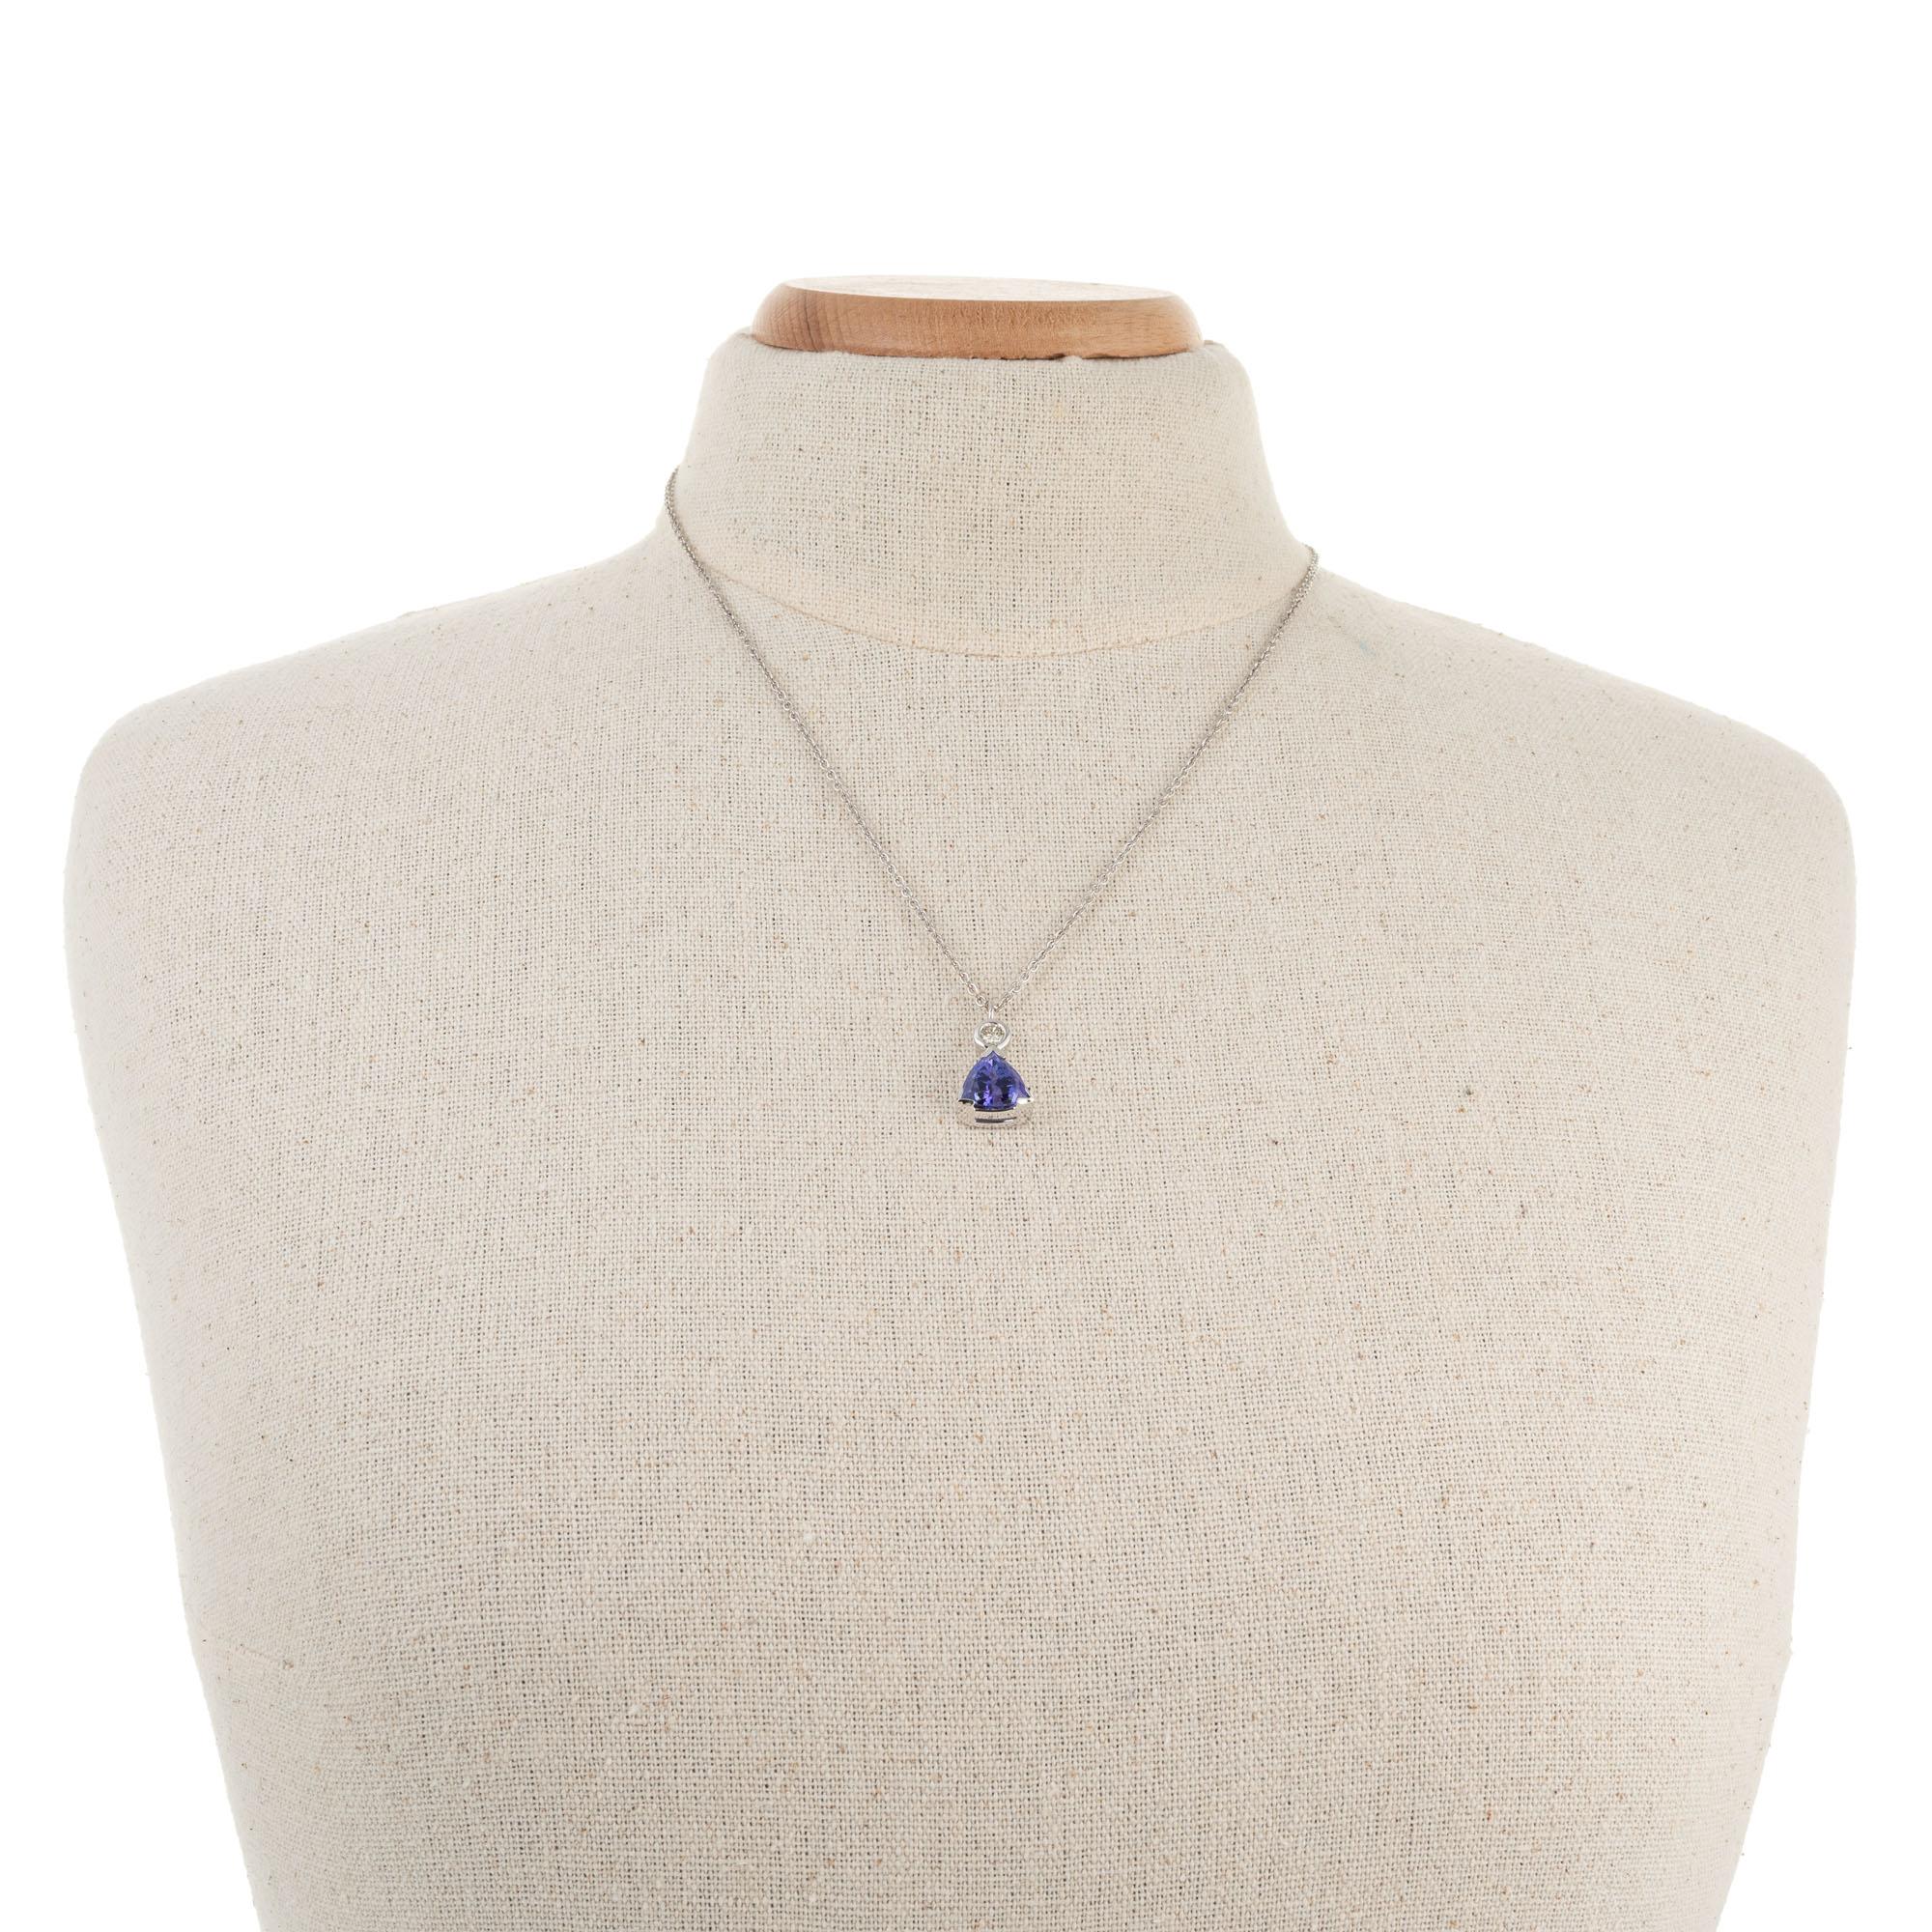 Women's Peter Suchy 4.20 Carat Tanzanite Diamond White Gold Pendant Necklace For Sale